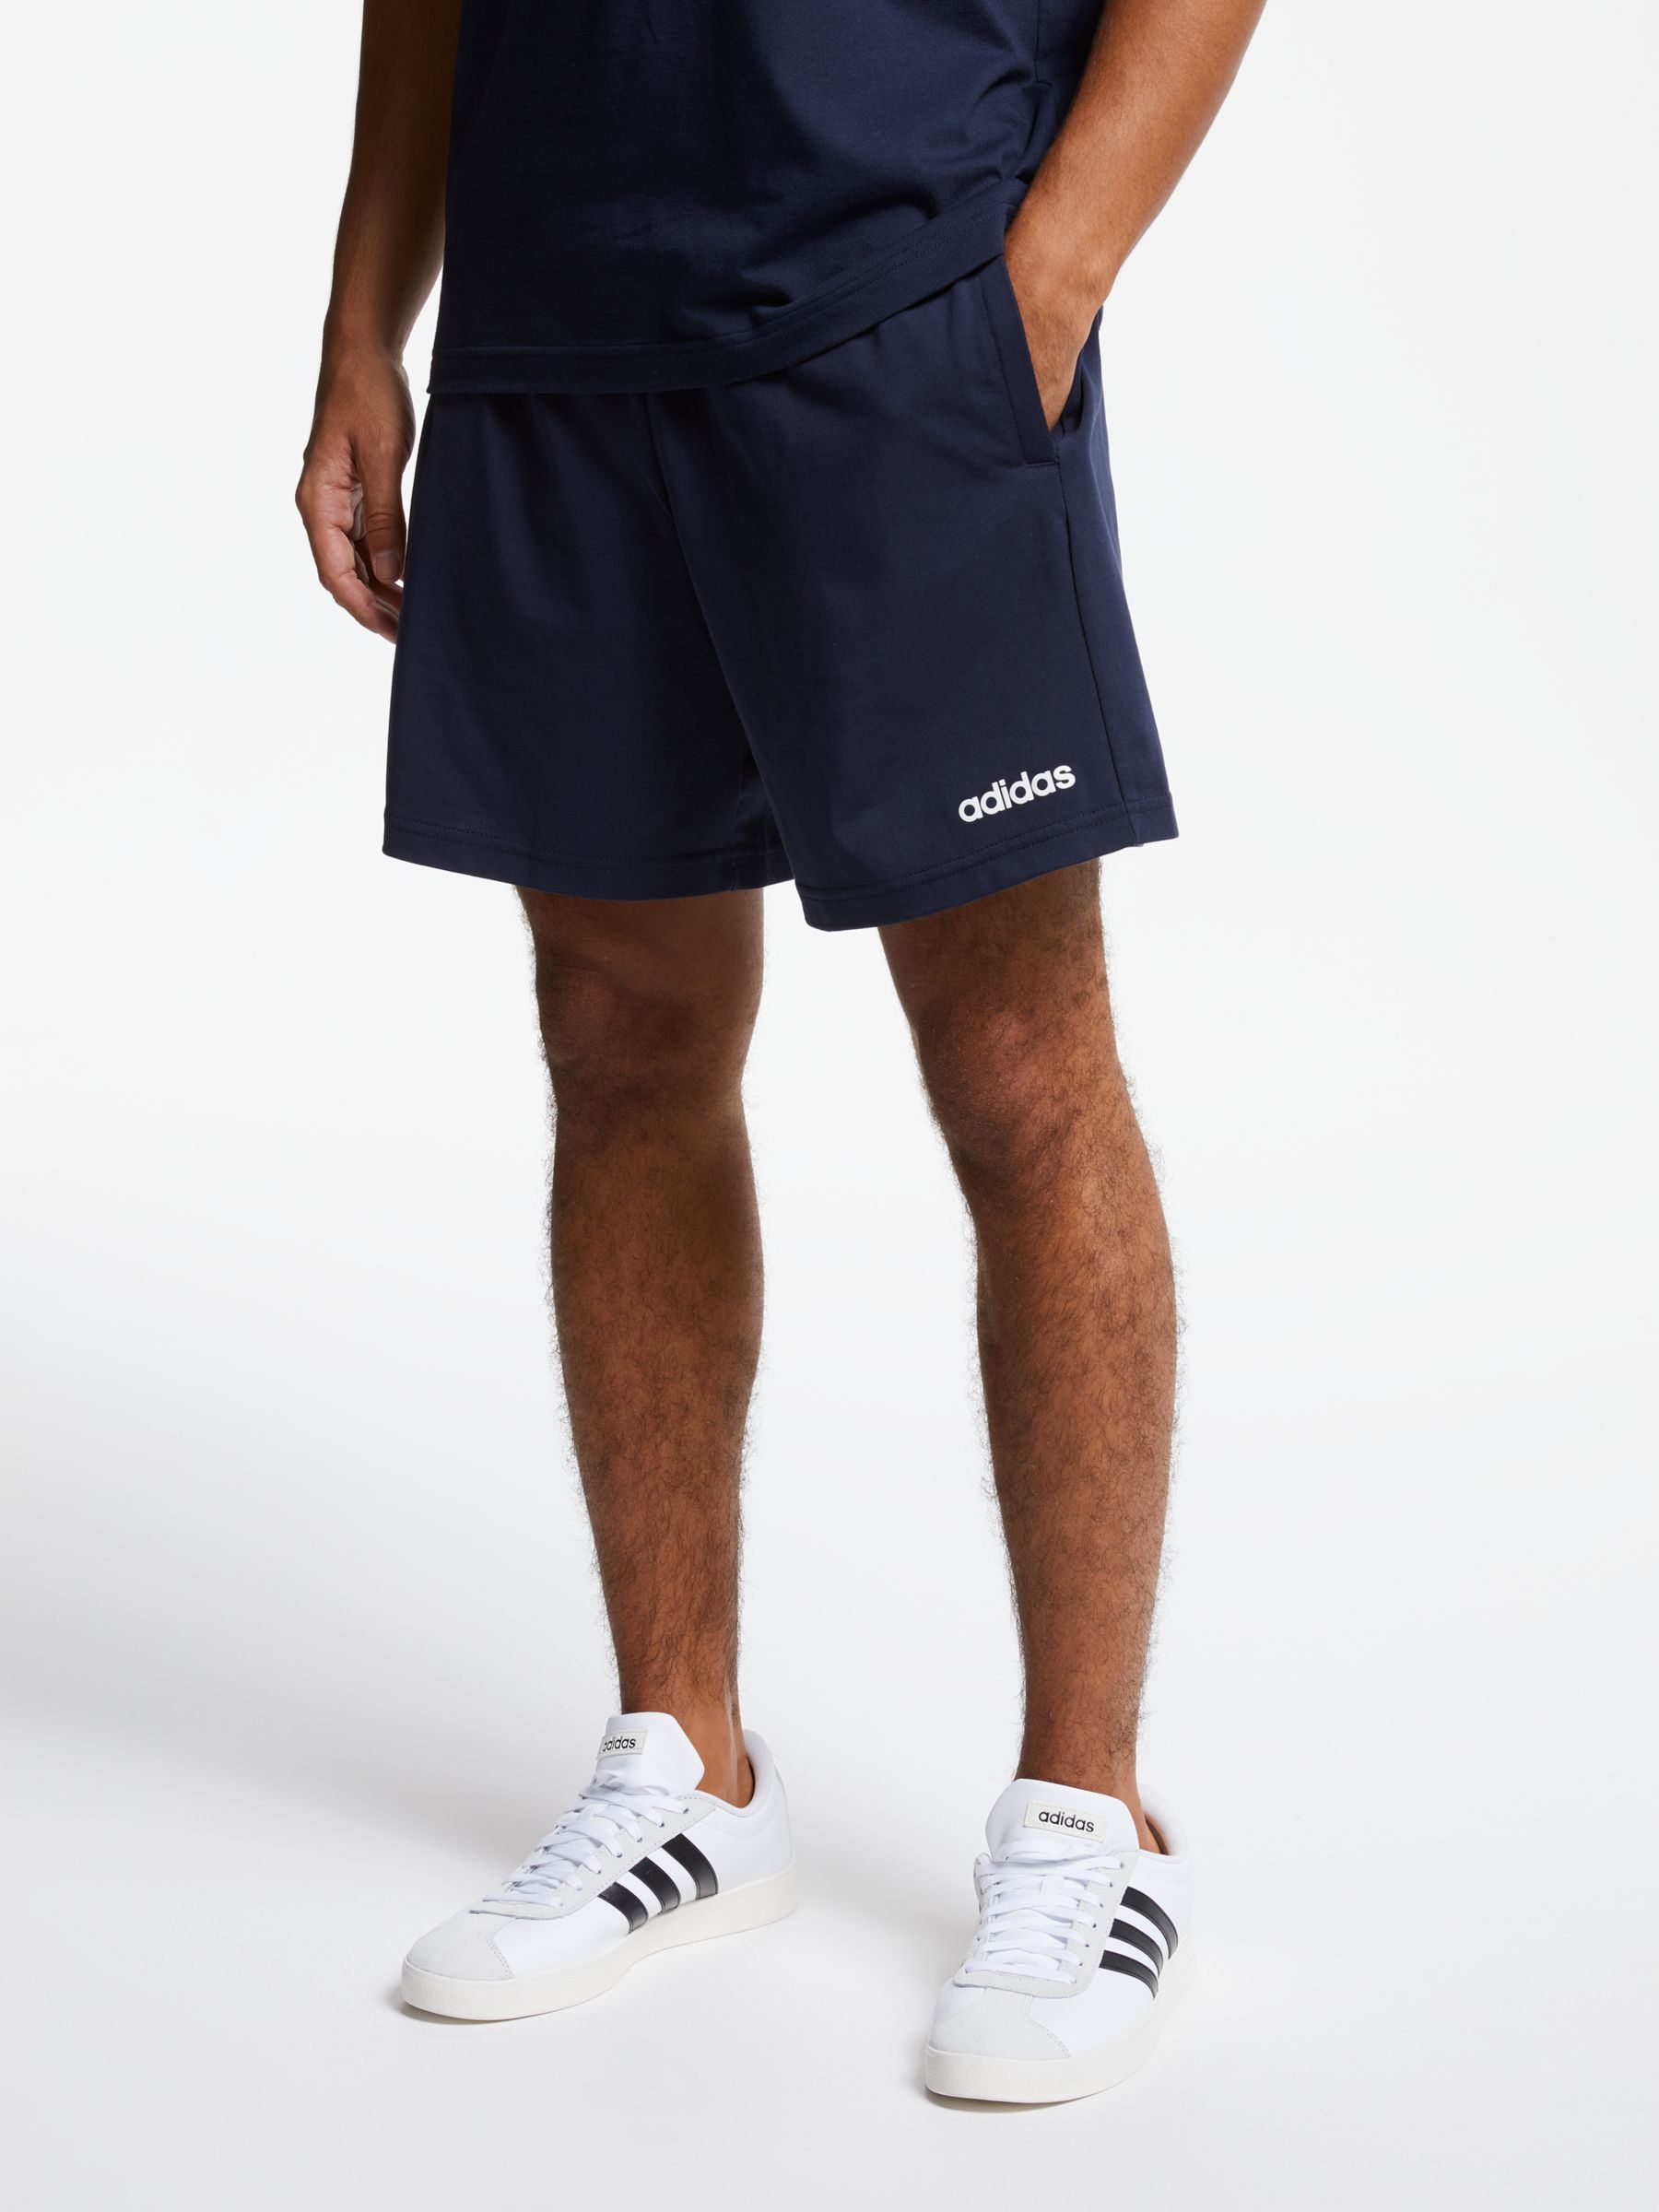 adidas jersey shorts